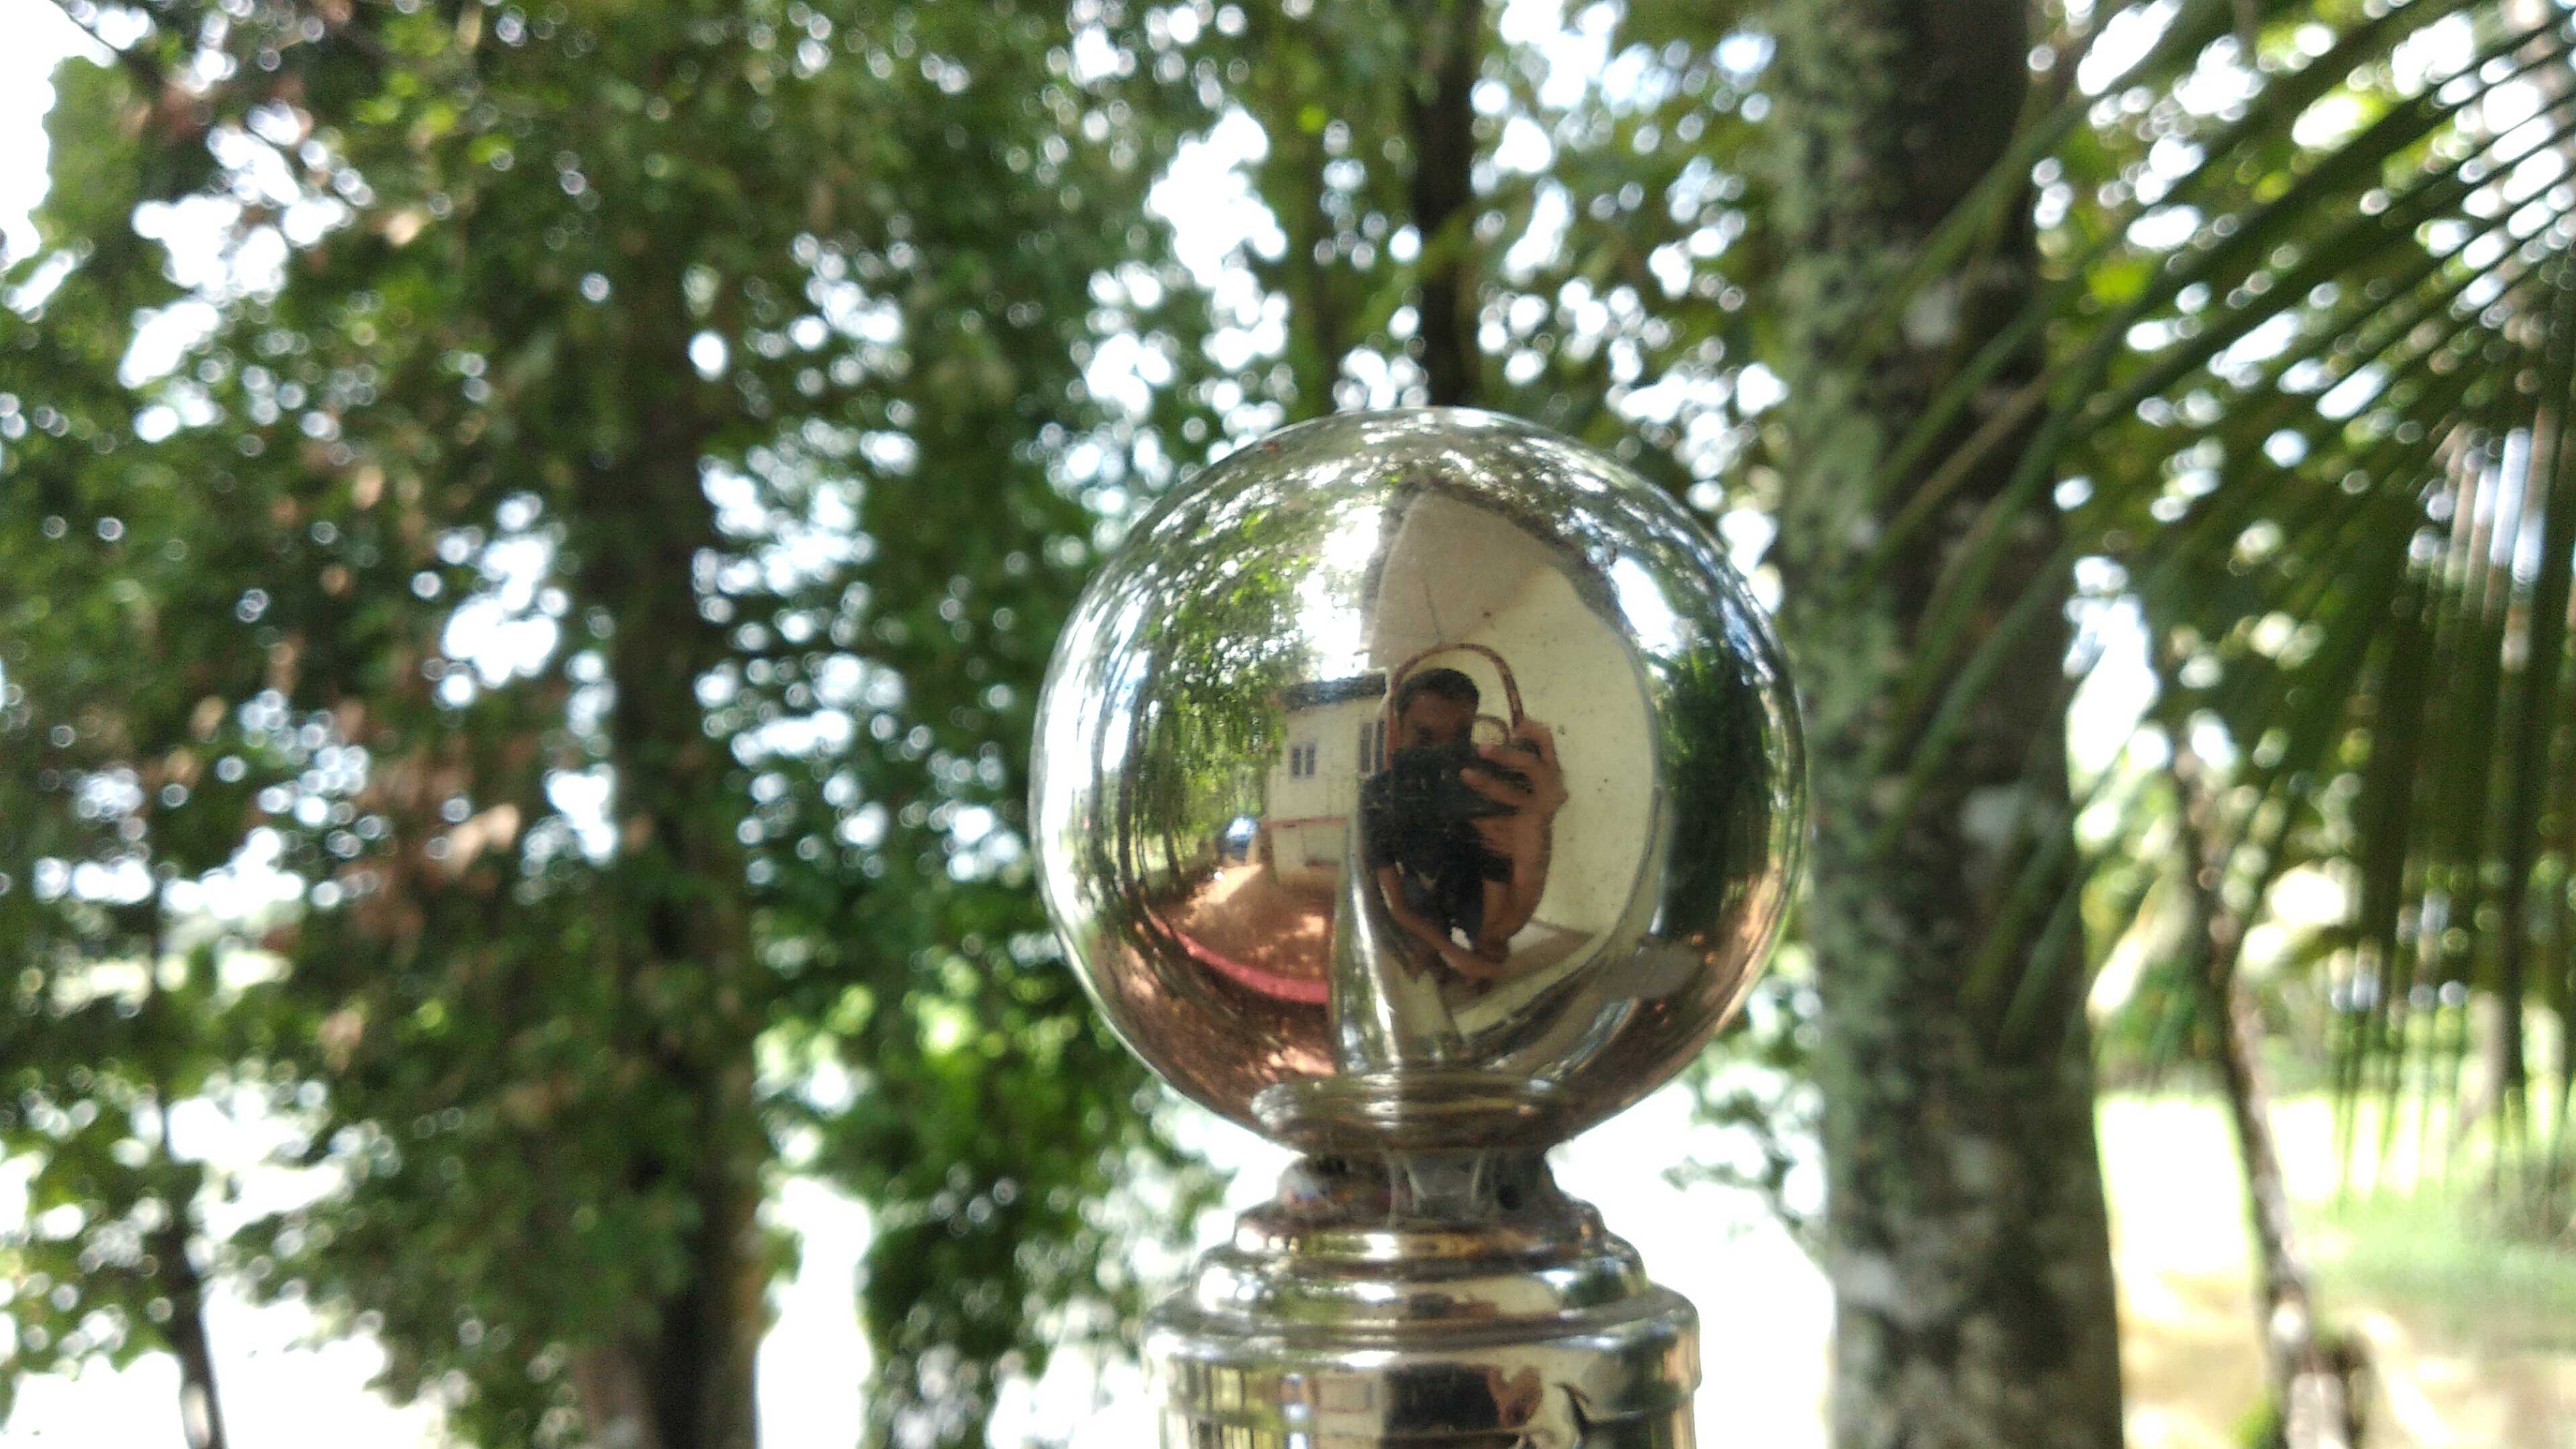 my reflection on a shiny ball